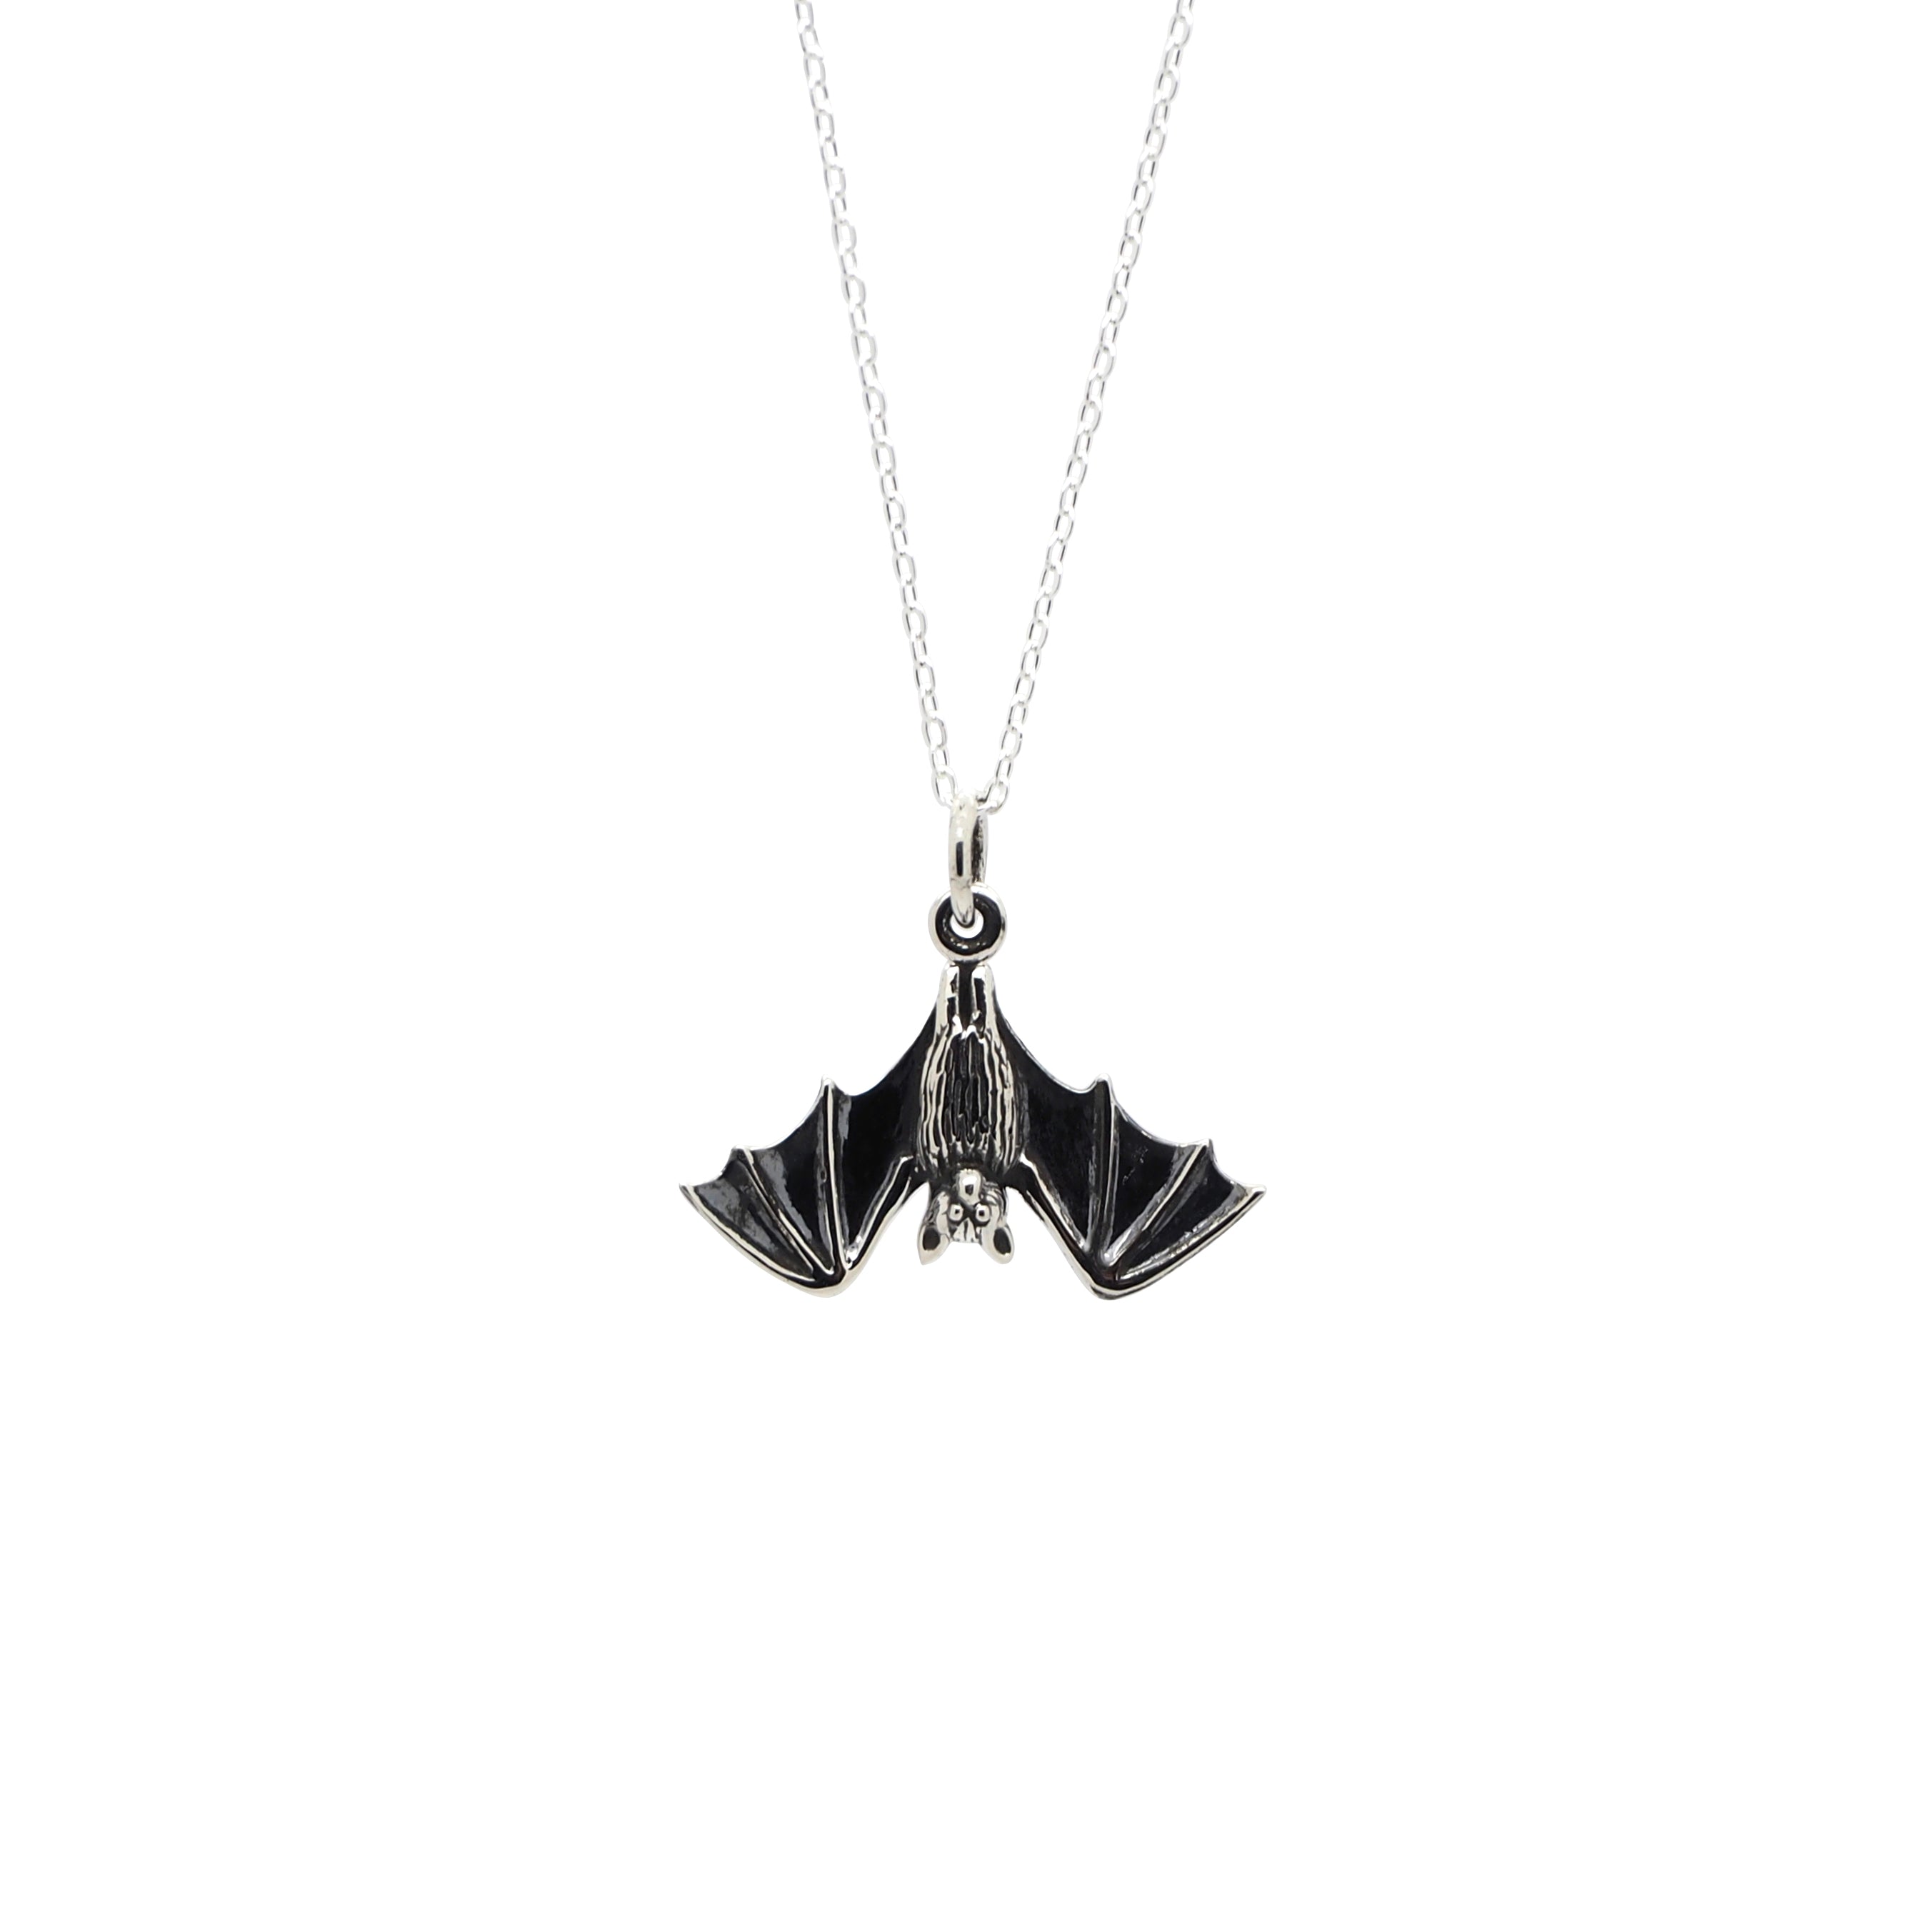 Sterling Silver Hanging Bat Necklace